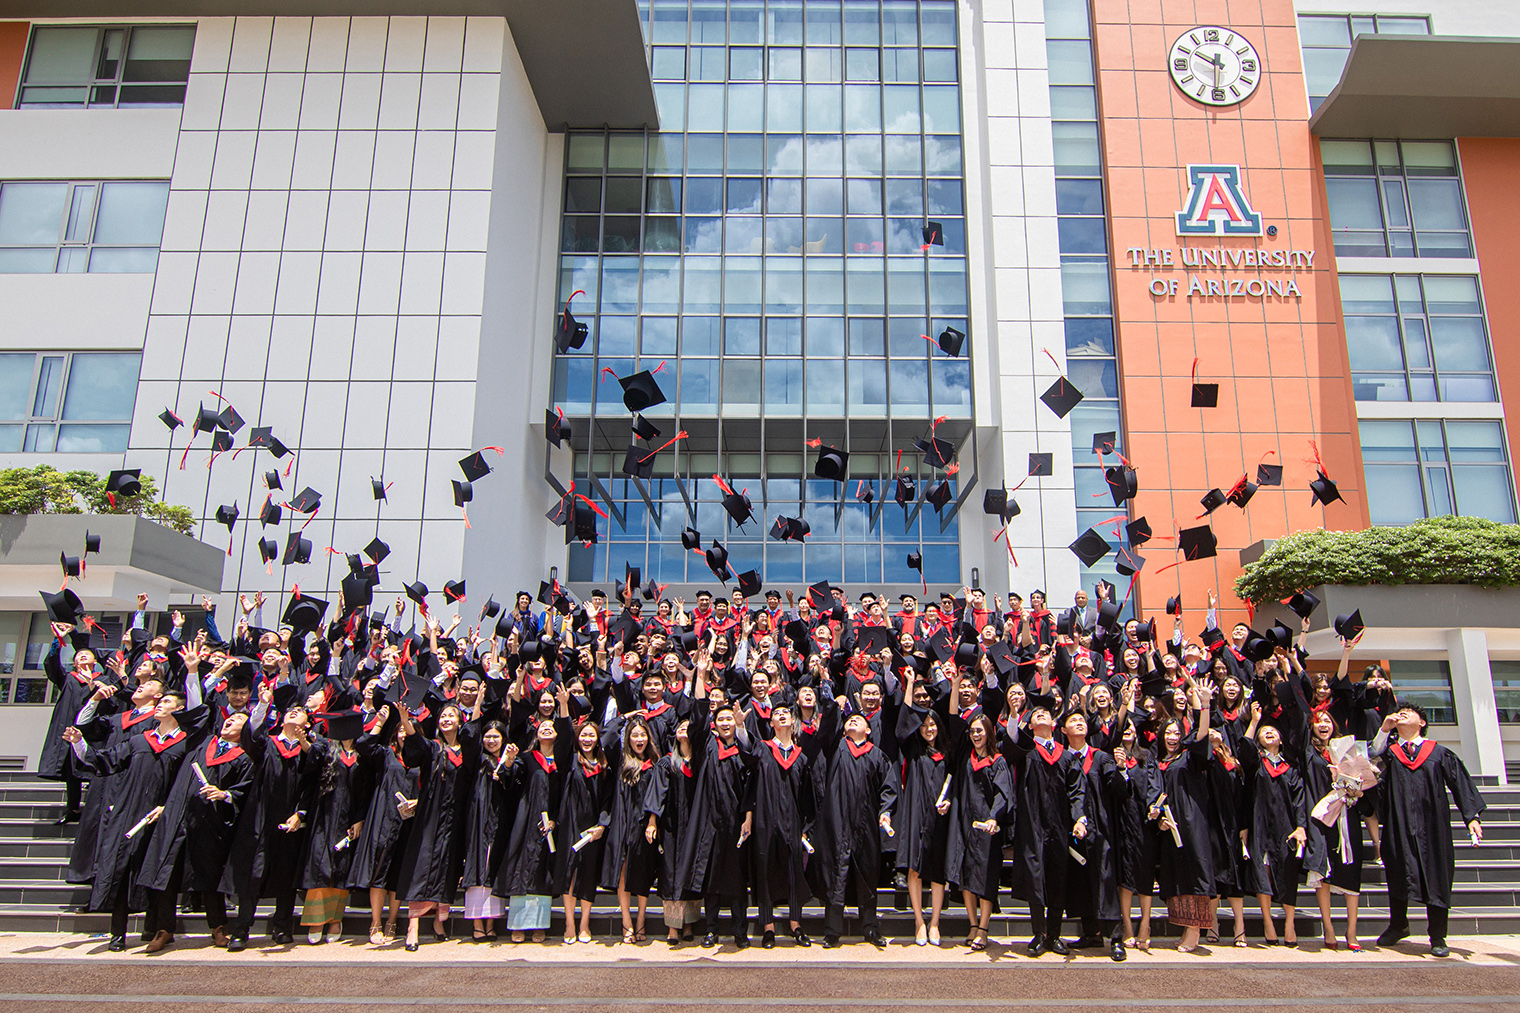 AUPP +Uarizona dual degree graduates throwing their graduation caps in the air